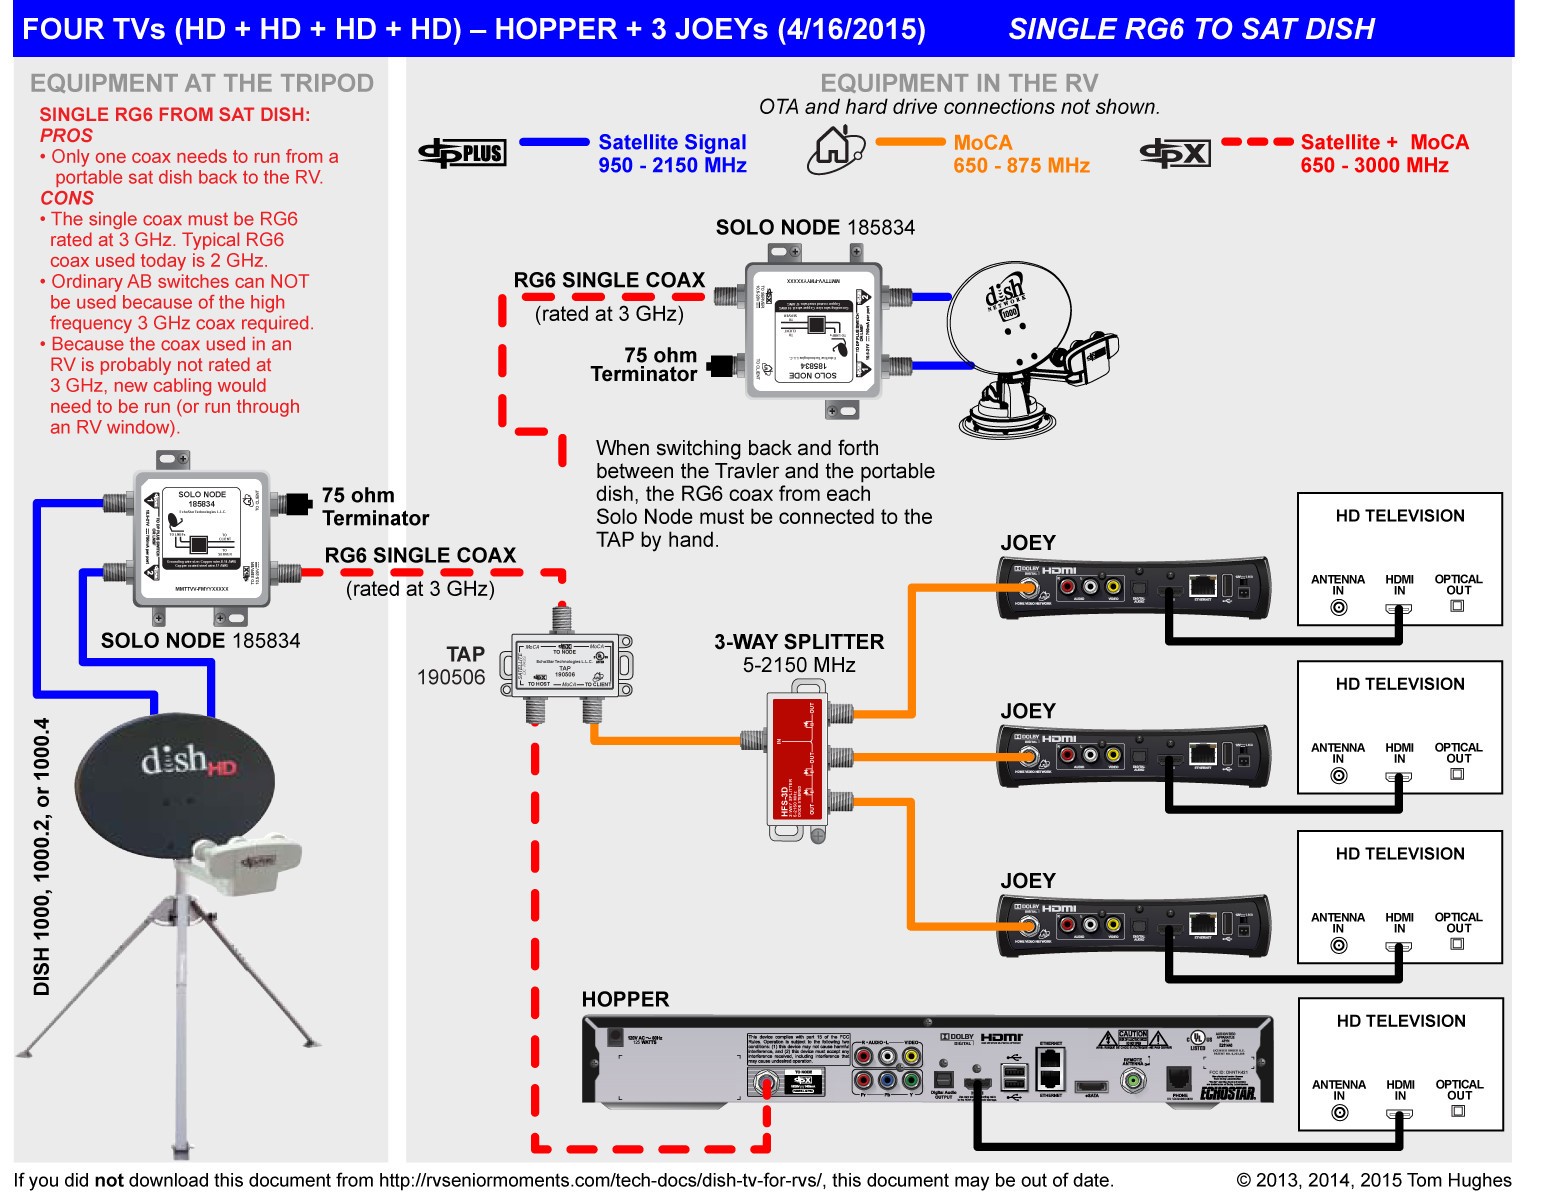 dish hopper super joey wiring diagram dish network hopper and joey wiring diagram hopper sling